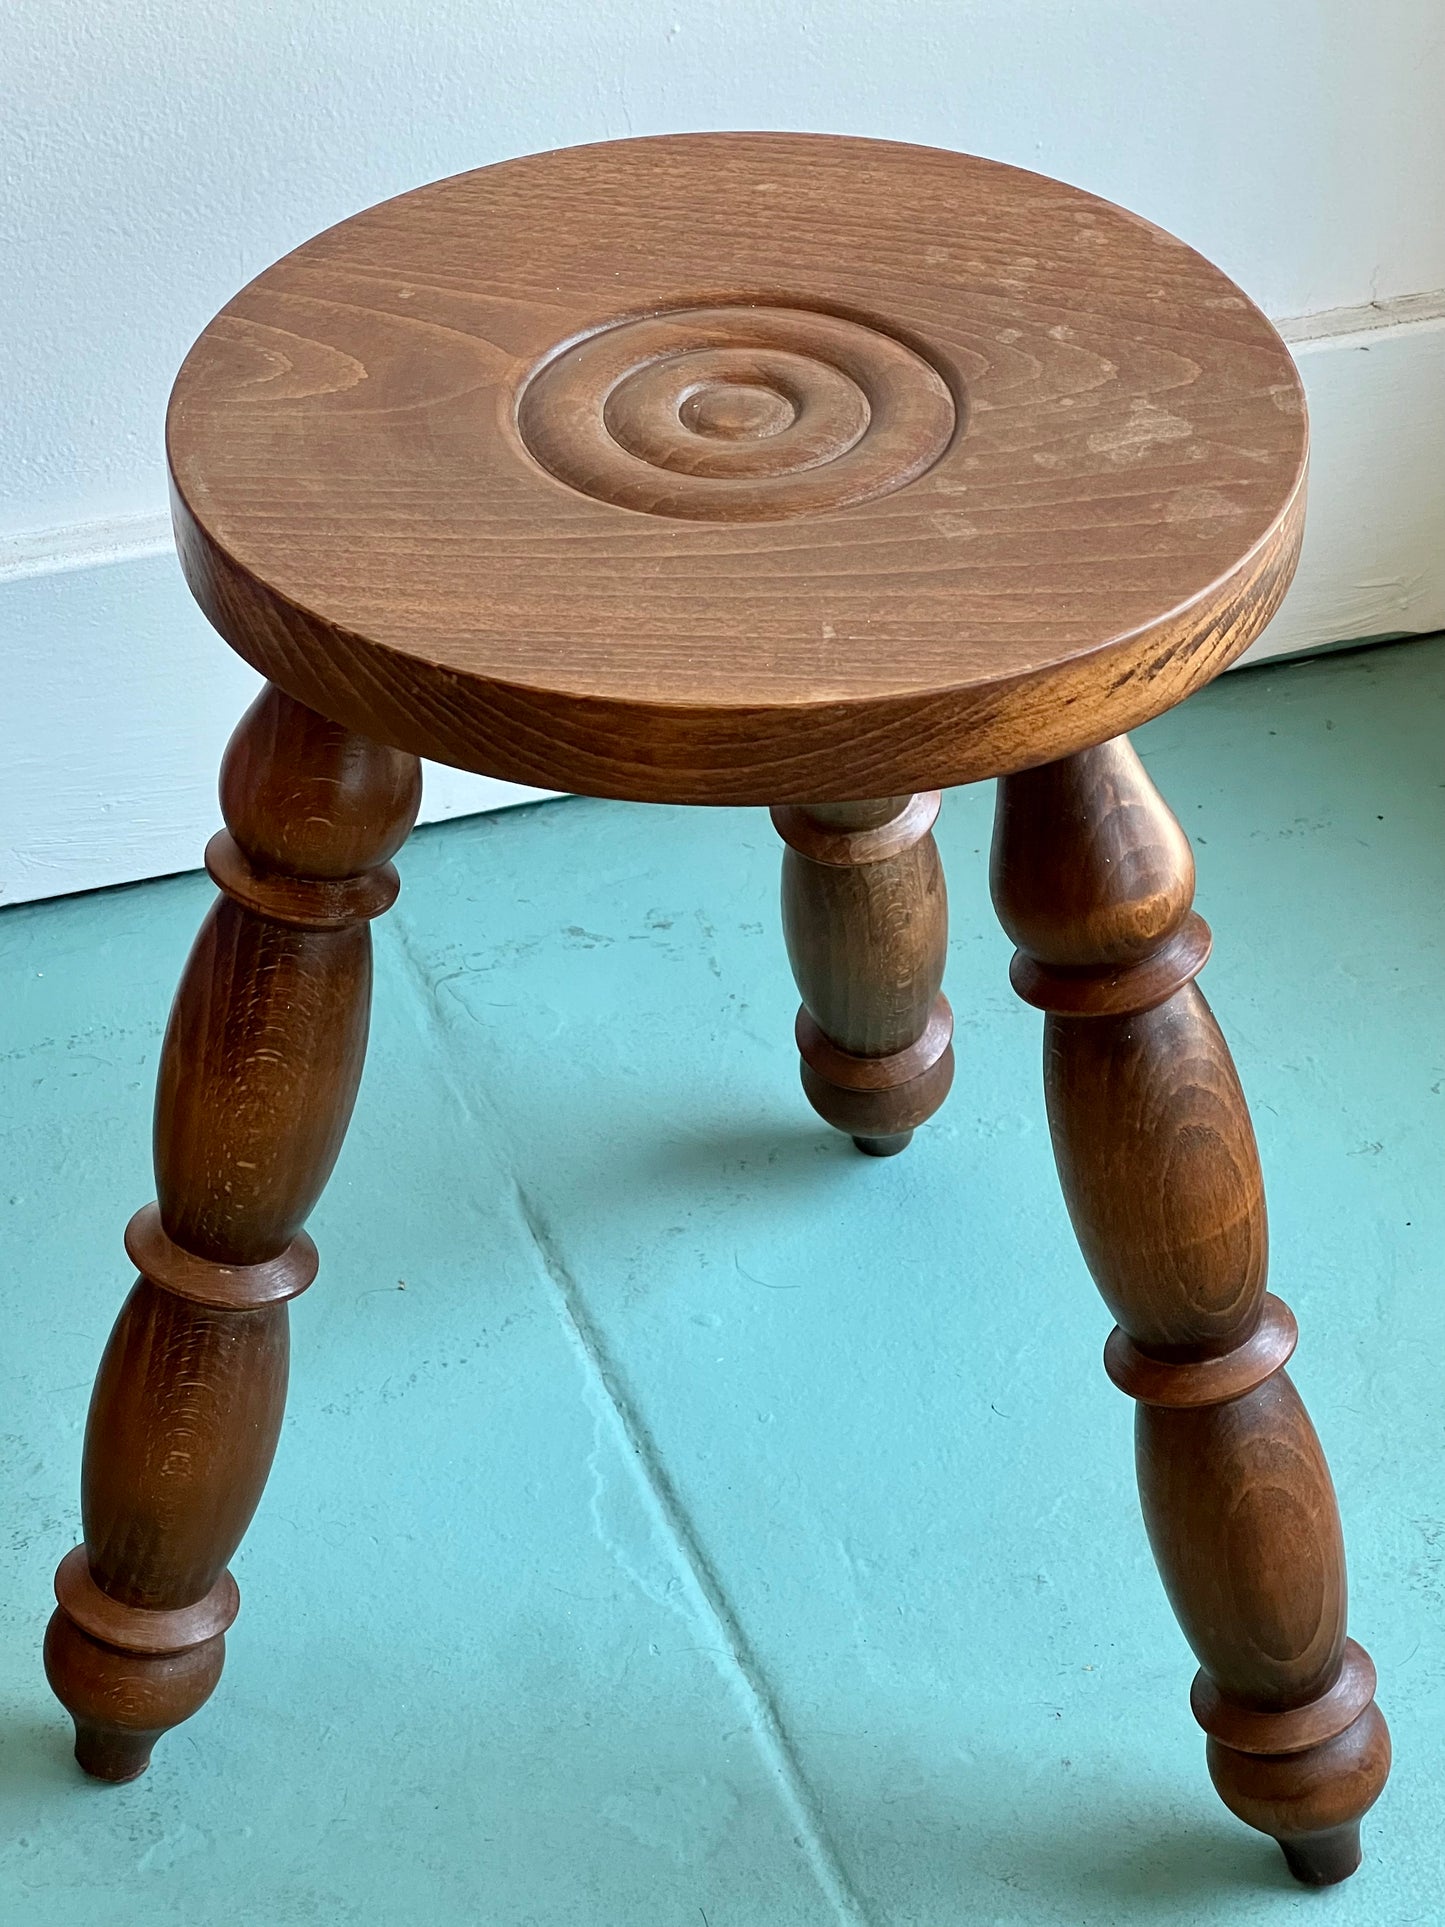 Vintage French tripod stool